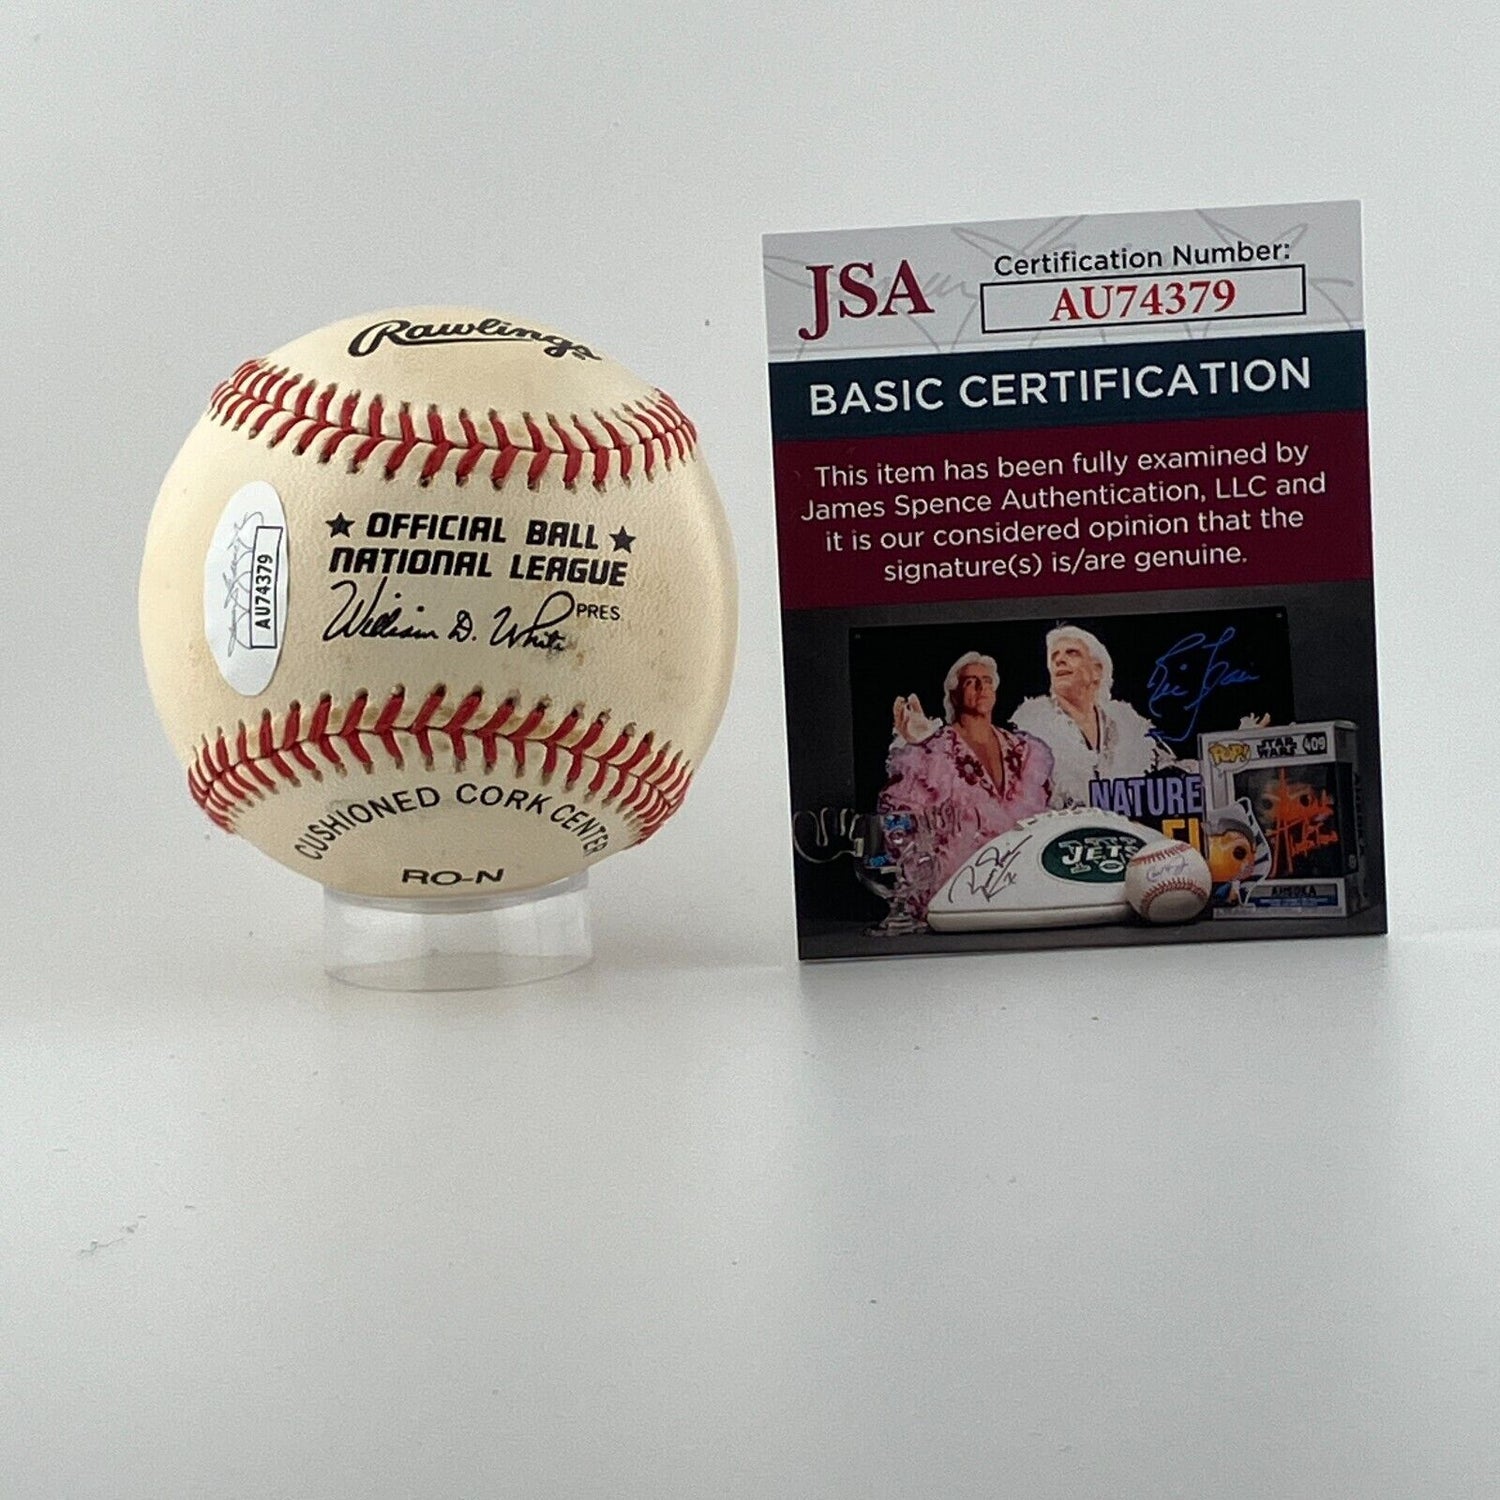 Don Mueller Single Signed Baseball, 1980s Style Signature. Auto JSA